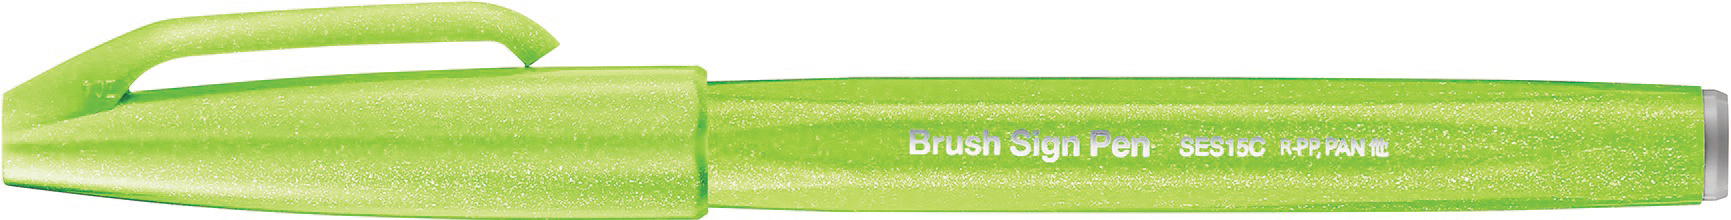 PENTEL Brush Sign Pen SES15C-K vert bourgeon vert bourgeon